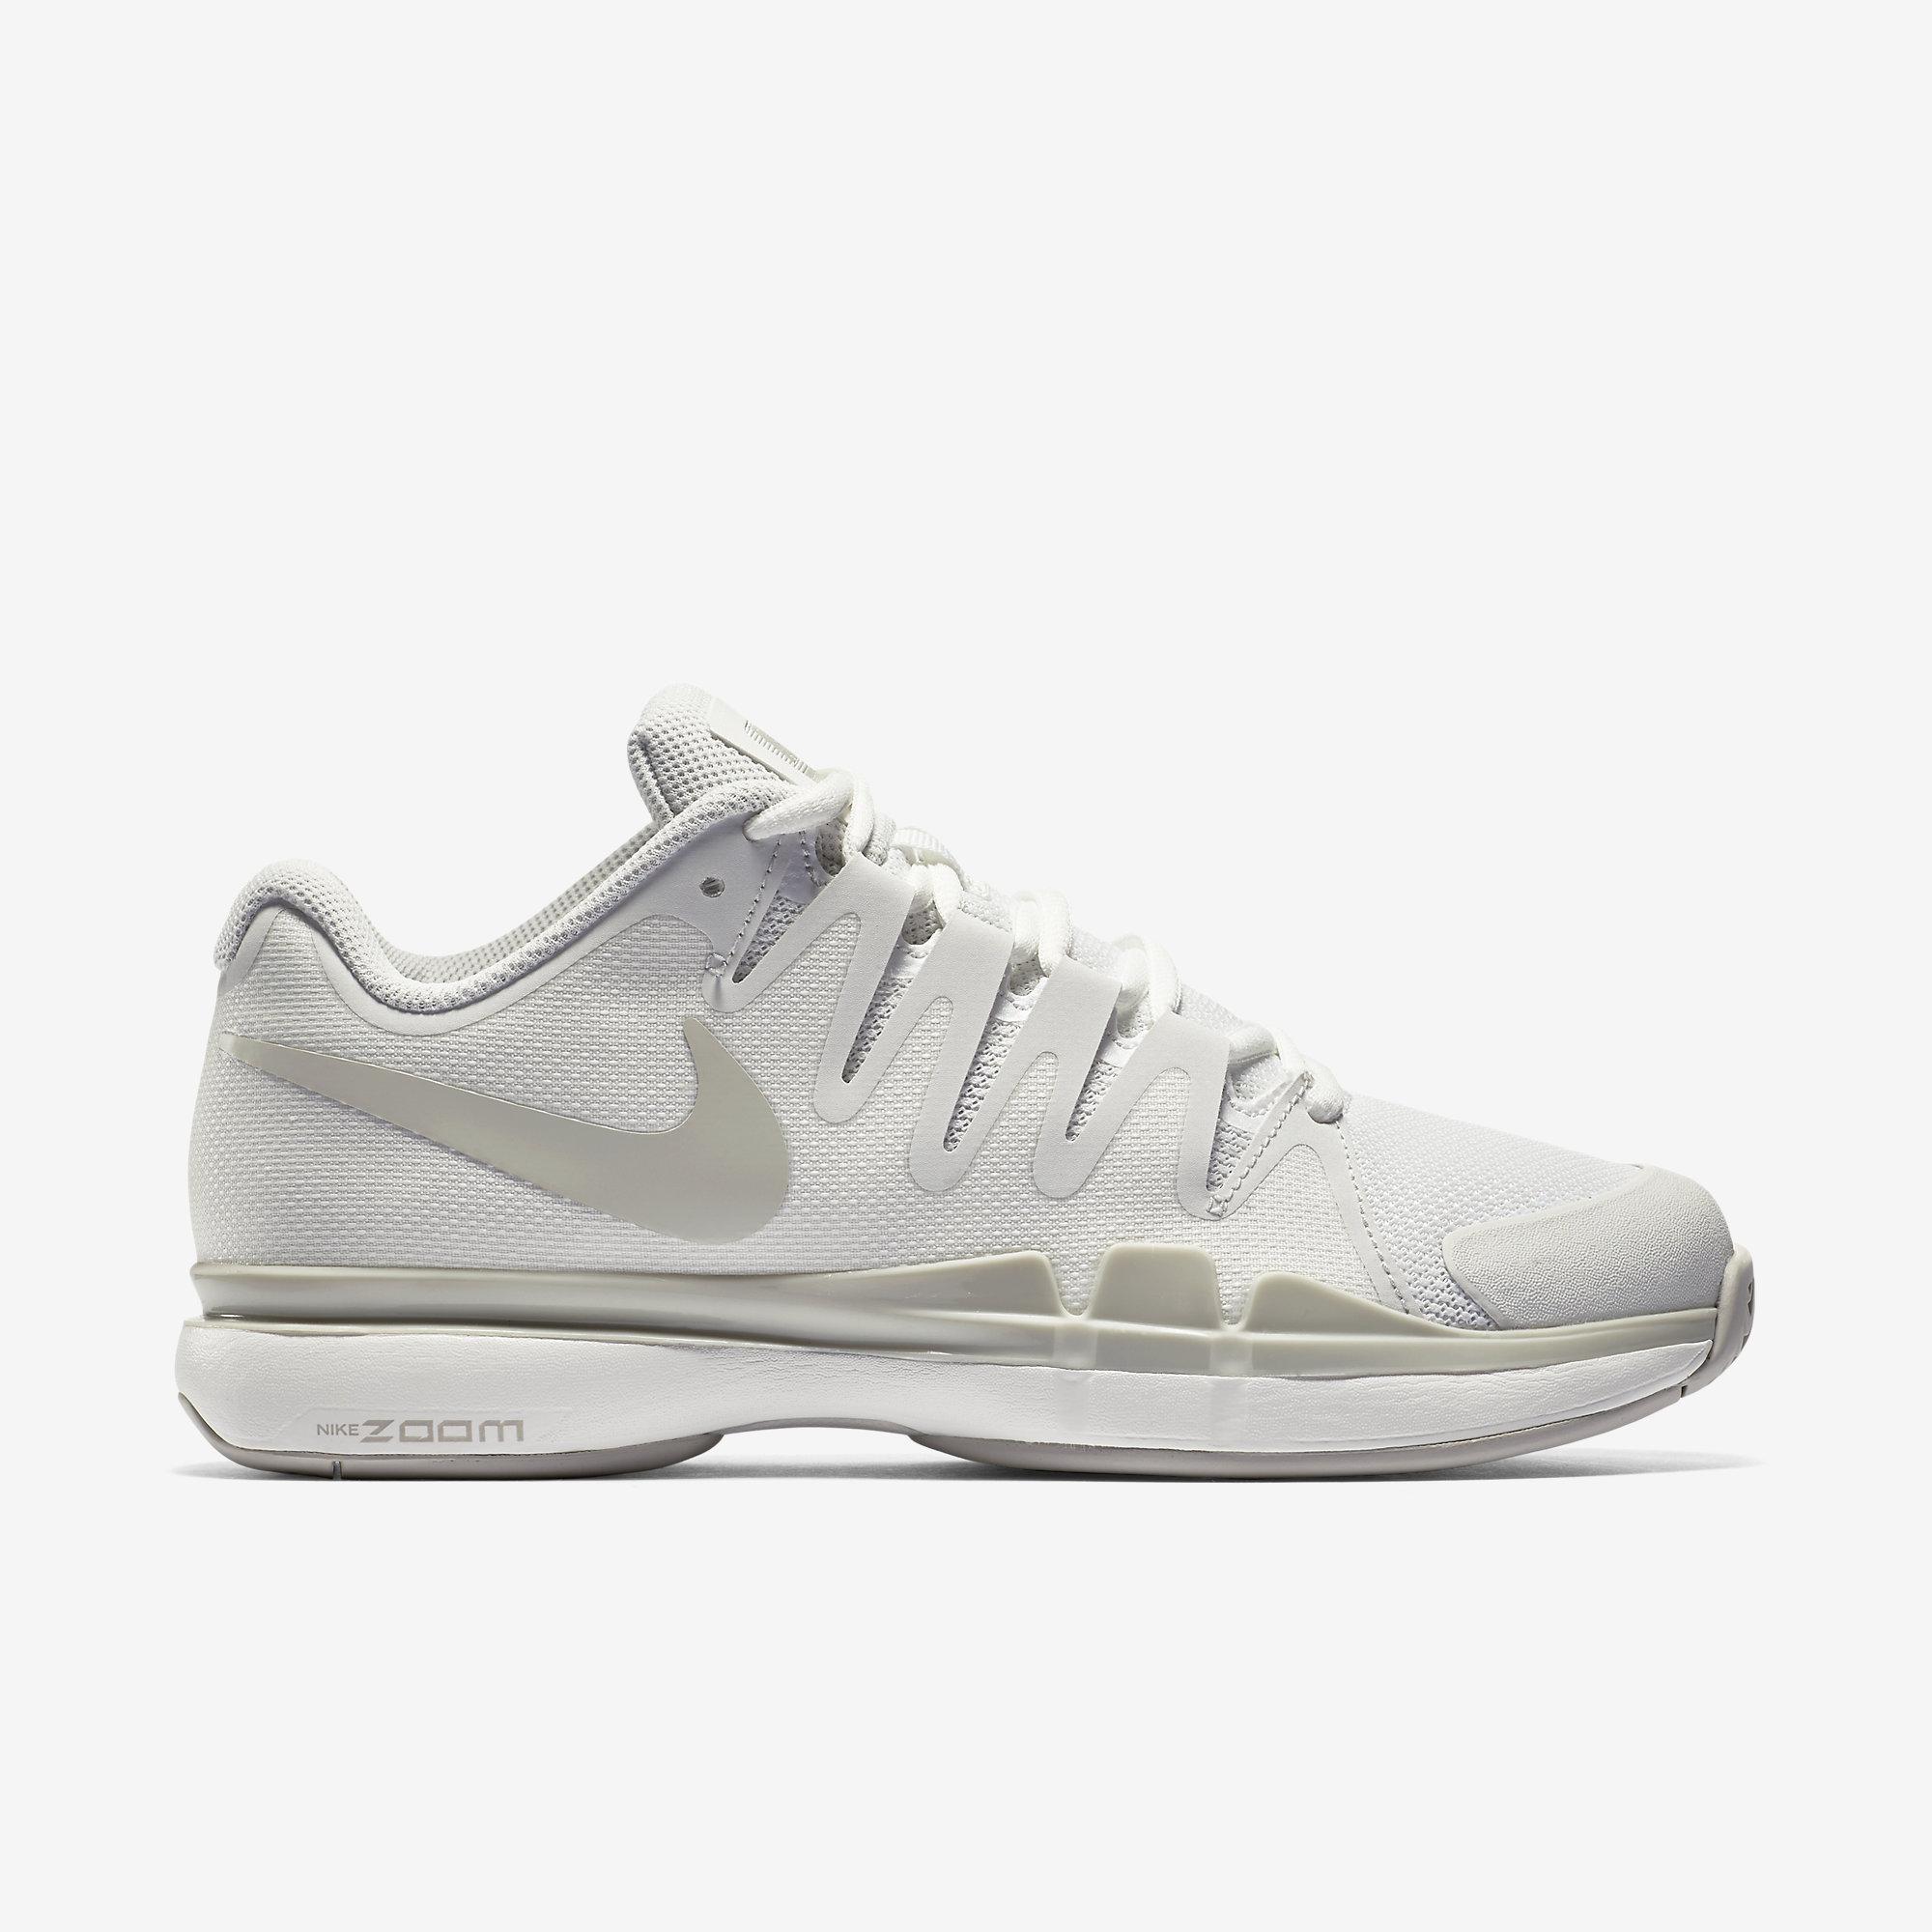 Nike Womens Zoom Vapor 9.5 Tennis Shoes - White